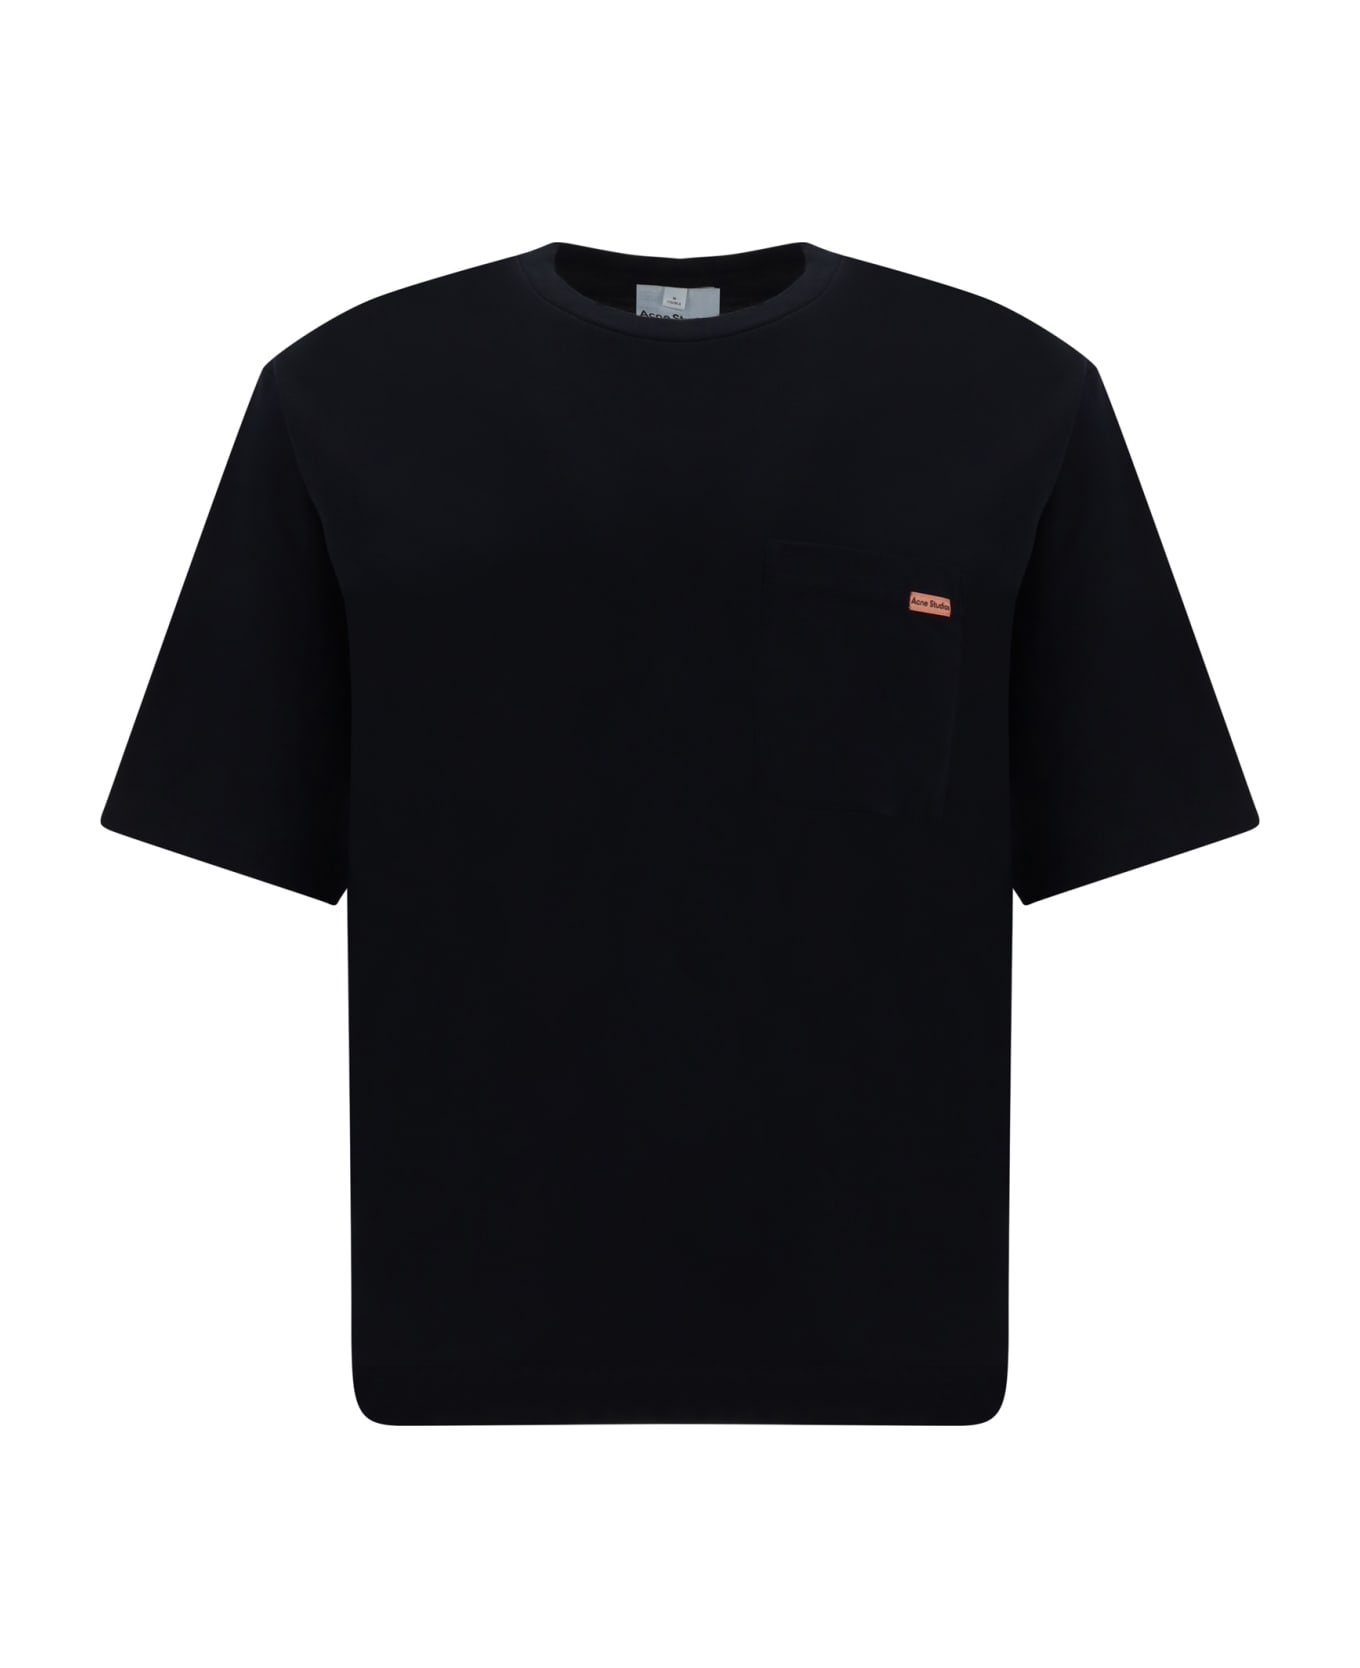 Acne Studios T-shirt - Black